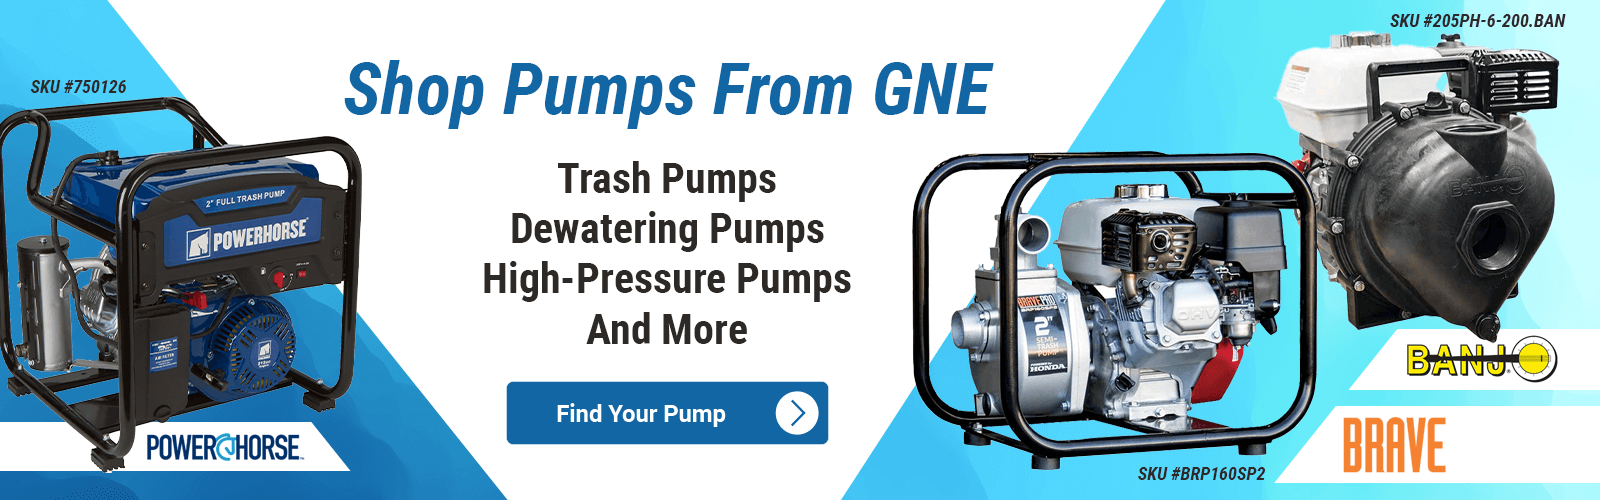 Shop Pumps at GNE